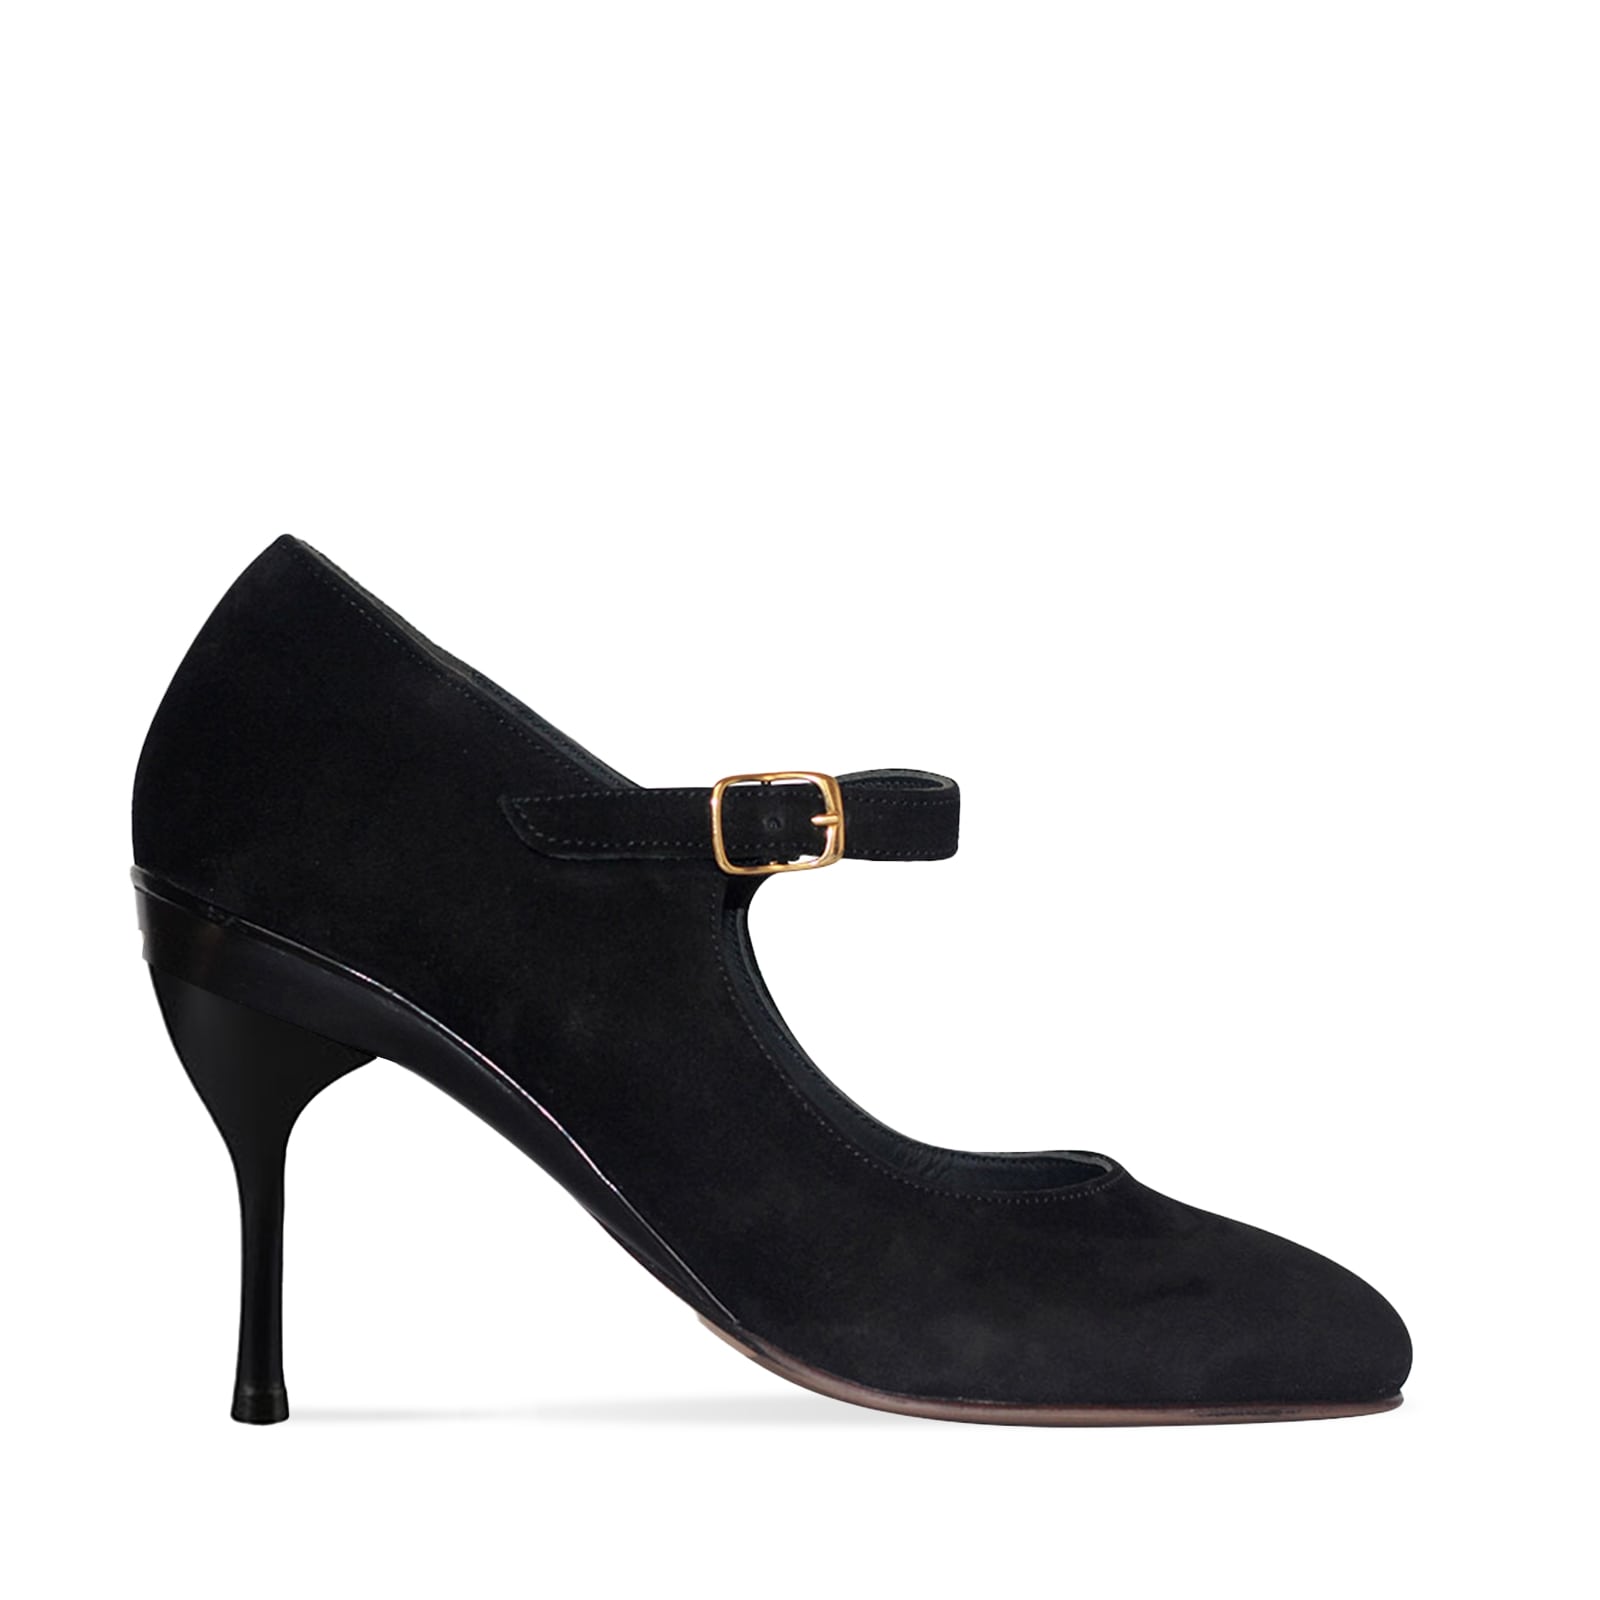 Multi-height heel shoes | Tanya HeathParis – Tanya Heath Paris